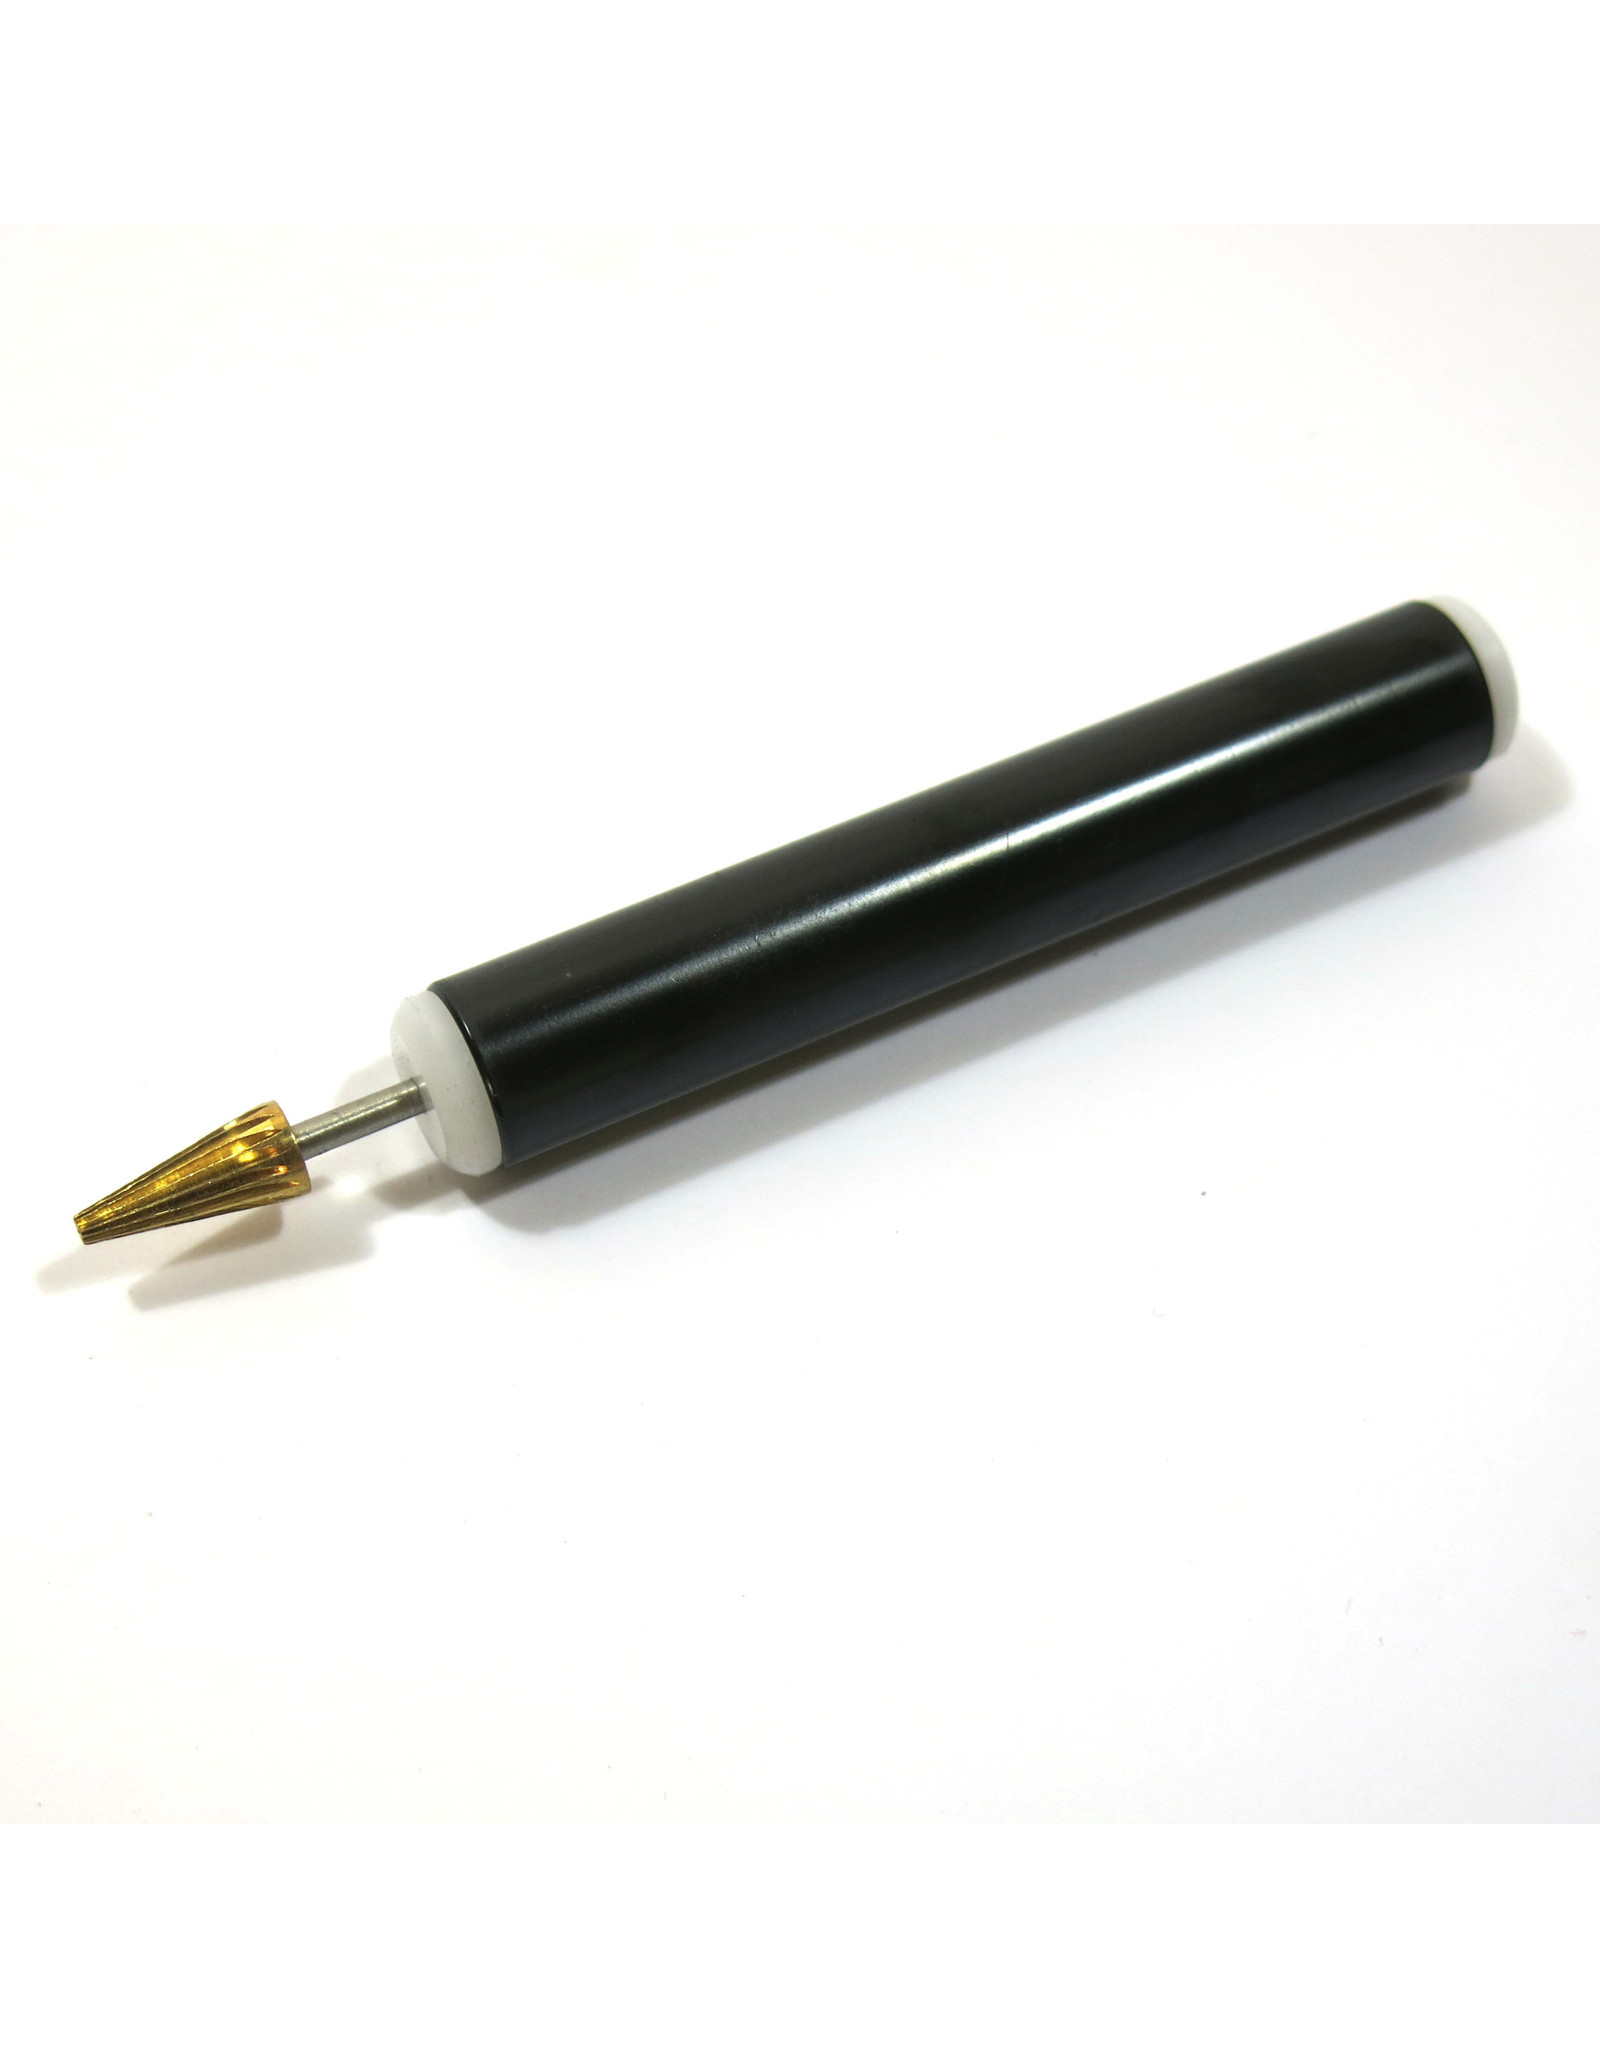 Edge paint roller pen